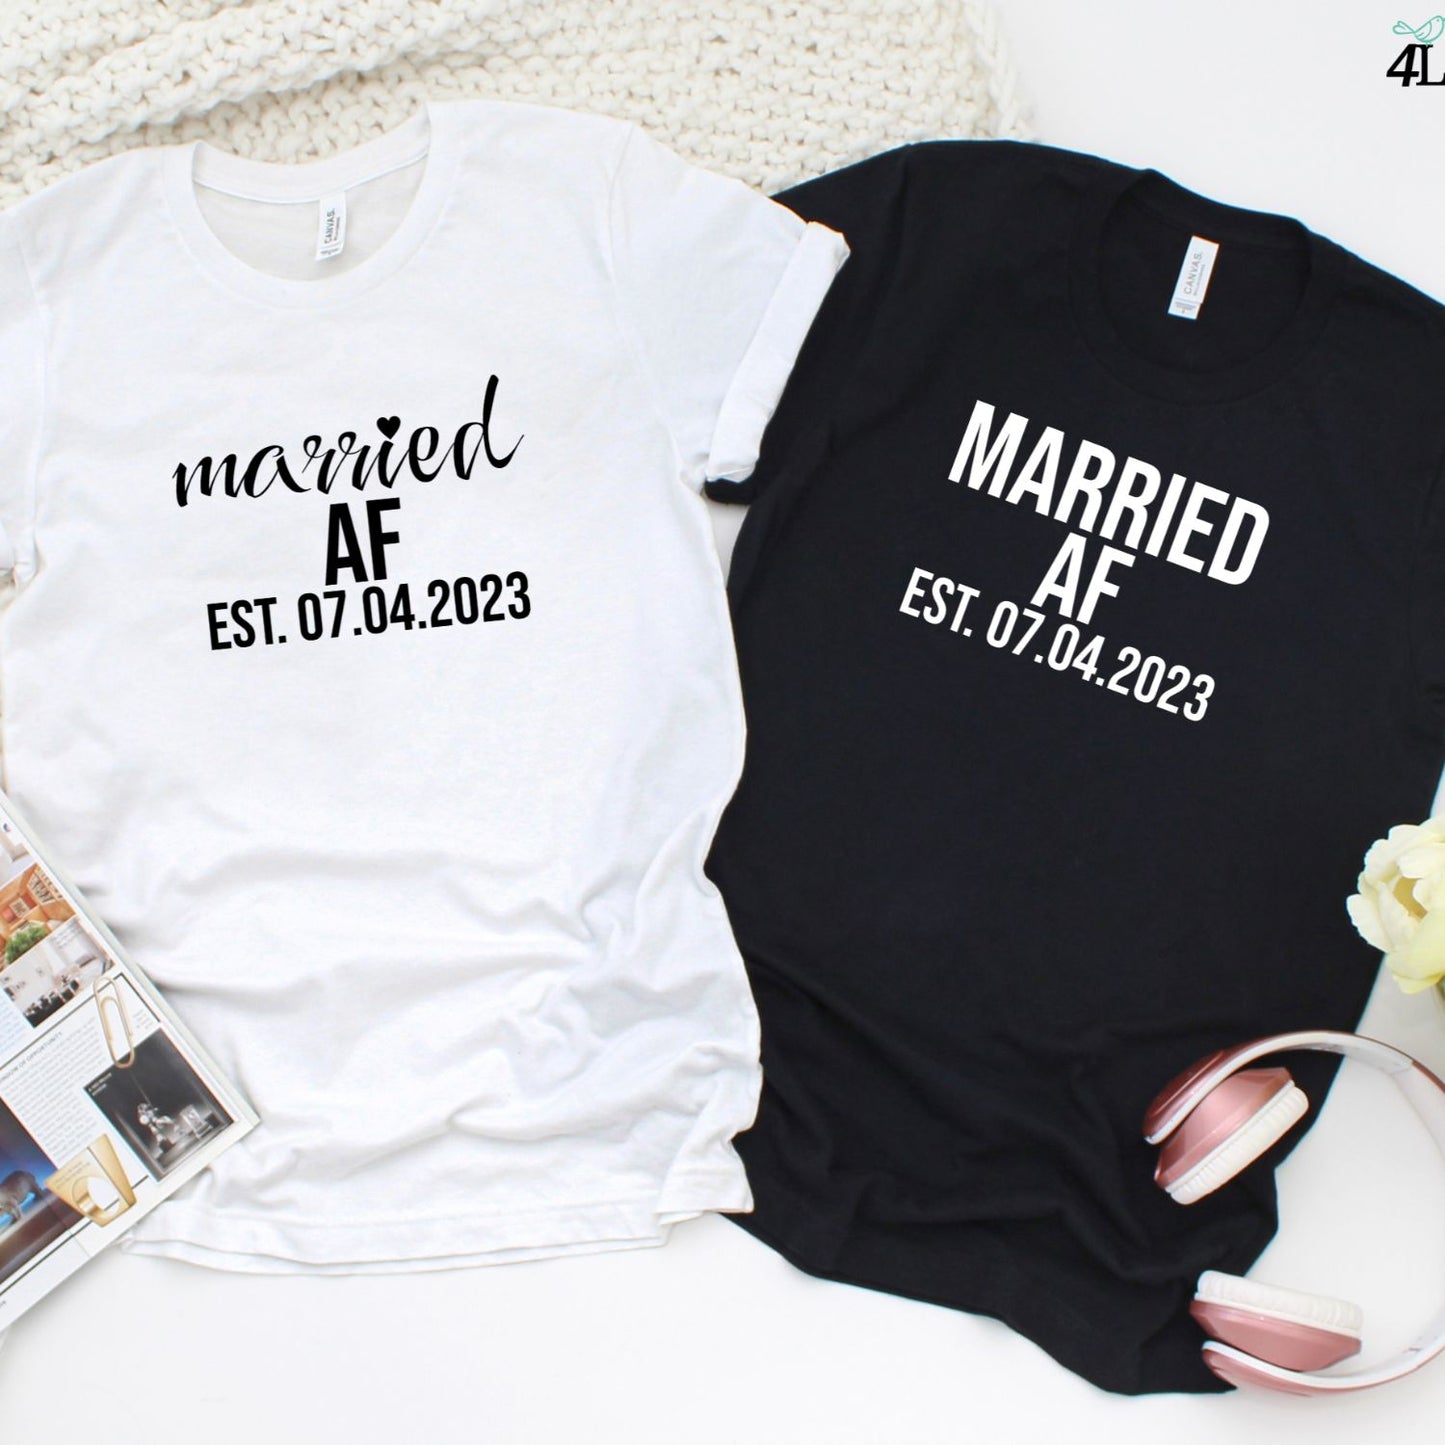 Married AF Hoodie, Wifey Hubby Sweatshirts, Honeymoon Long Sleeve Shirts, Bride Shirts, Groom Shirts, Mr And Mrs Shirt, Just Married Shirts